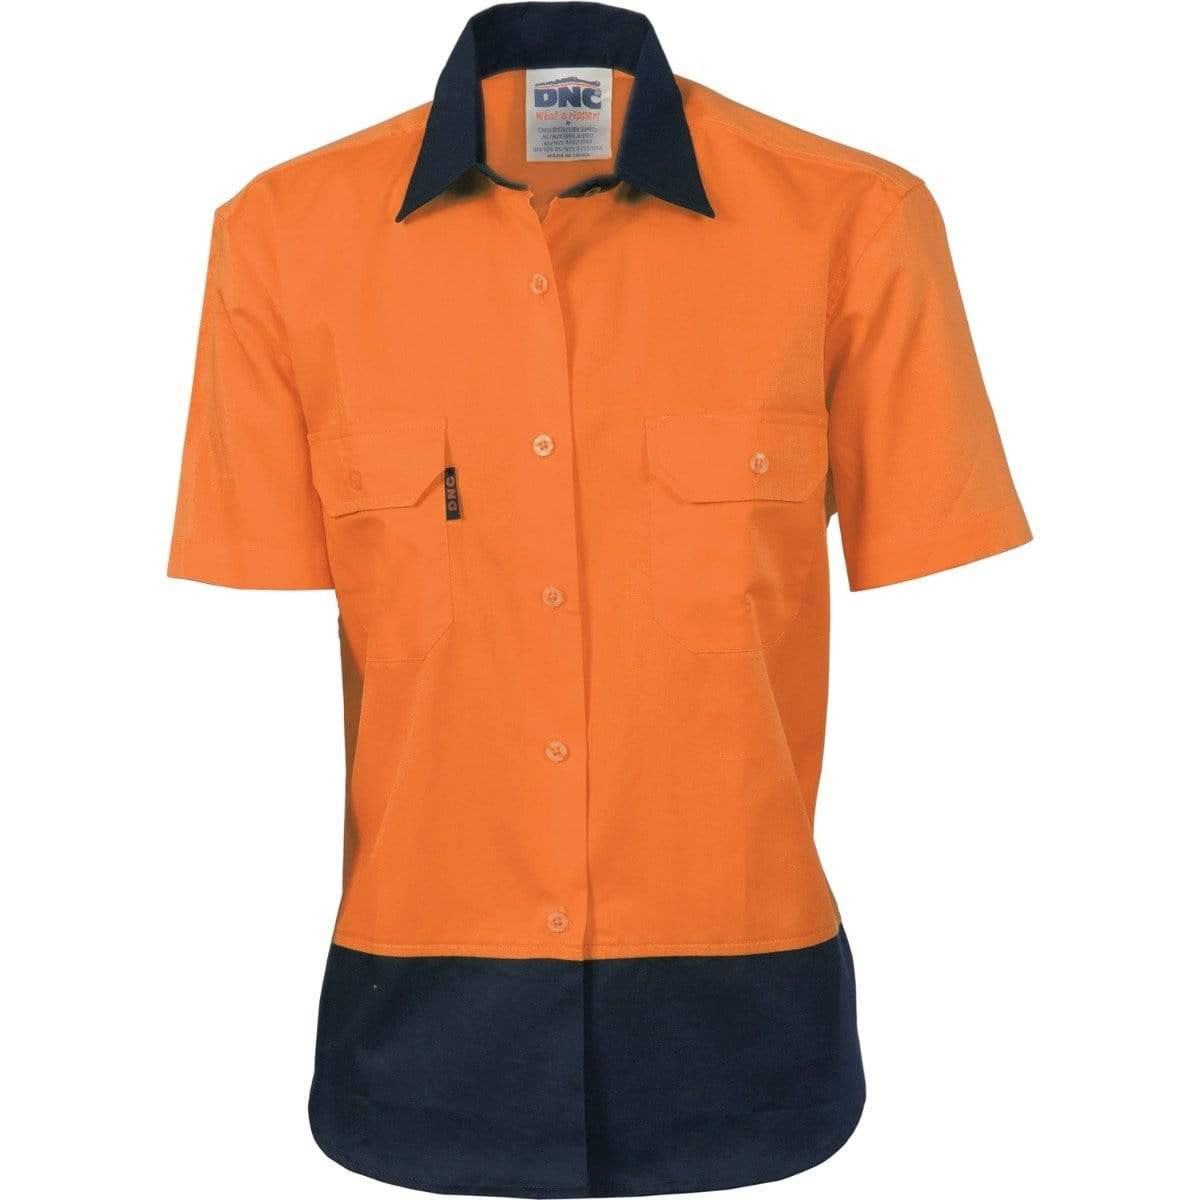 Dnc Workwear Women’s Hi-vis 2-tone Cool-breeze Short Sleeve Cotton Shirt - 3939 Work Wear DNC Workwear Orange/Navy 8 